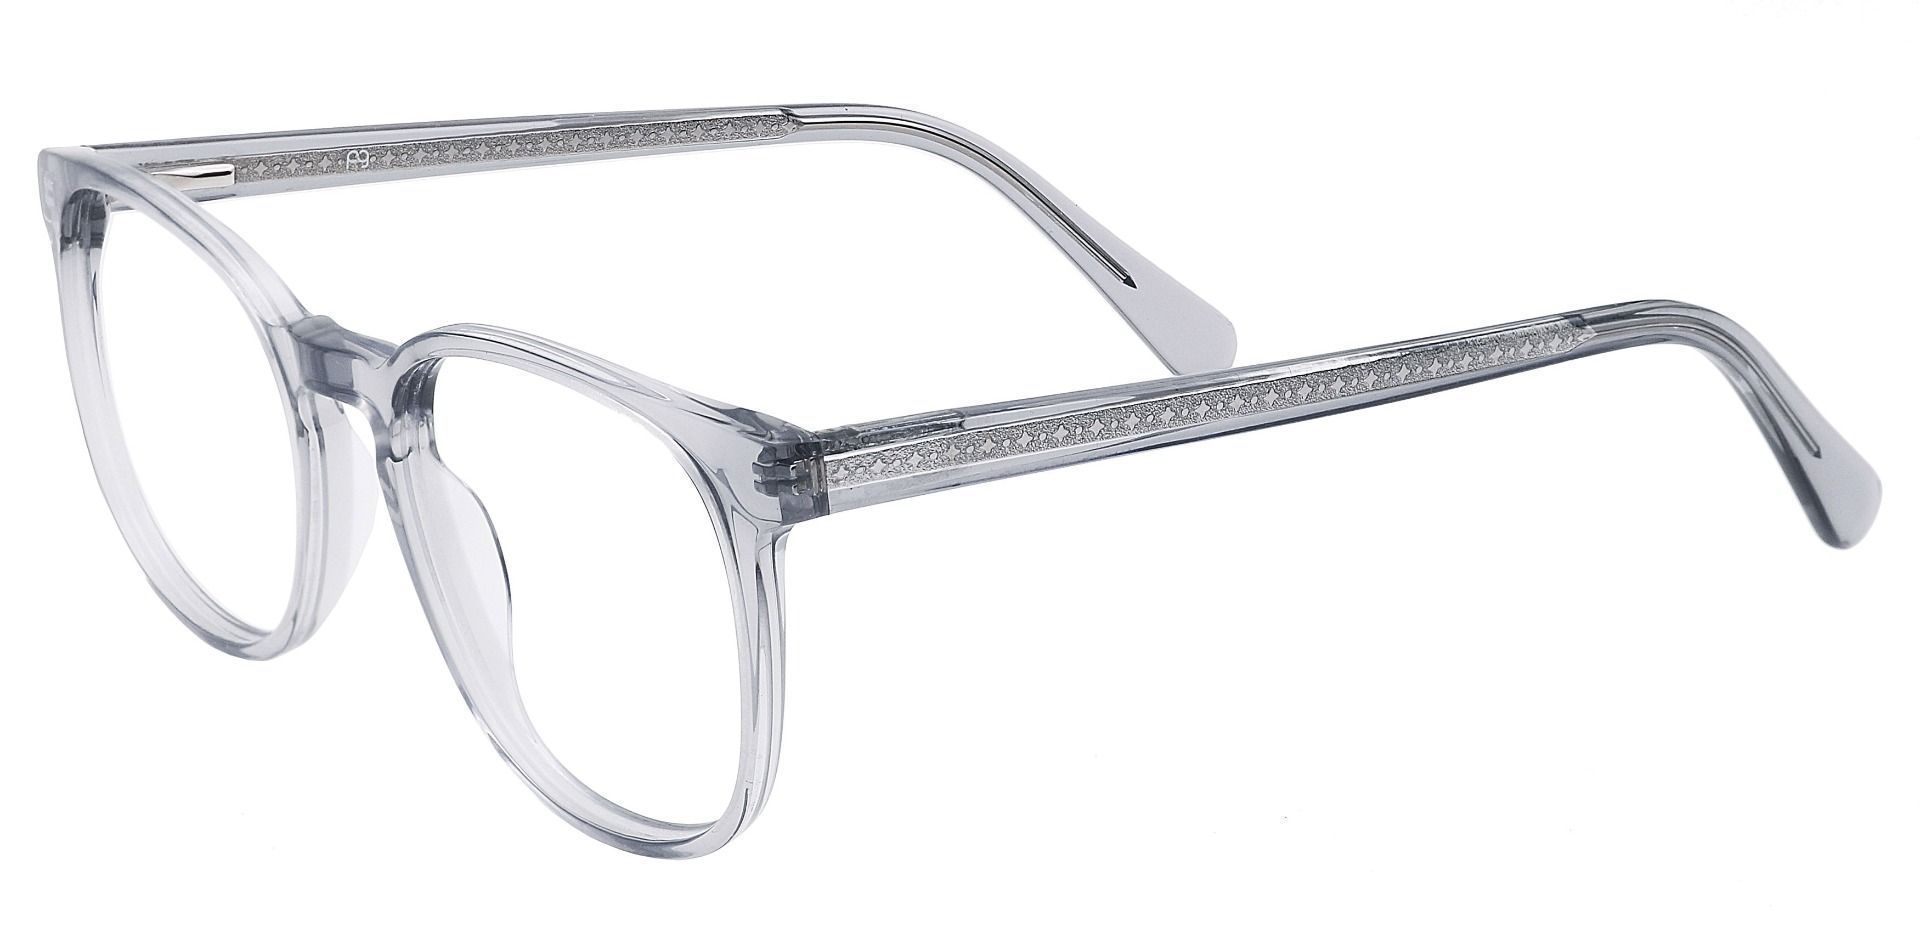 Nebula Round Lined Bifocal Glasses - Gray